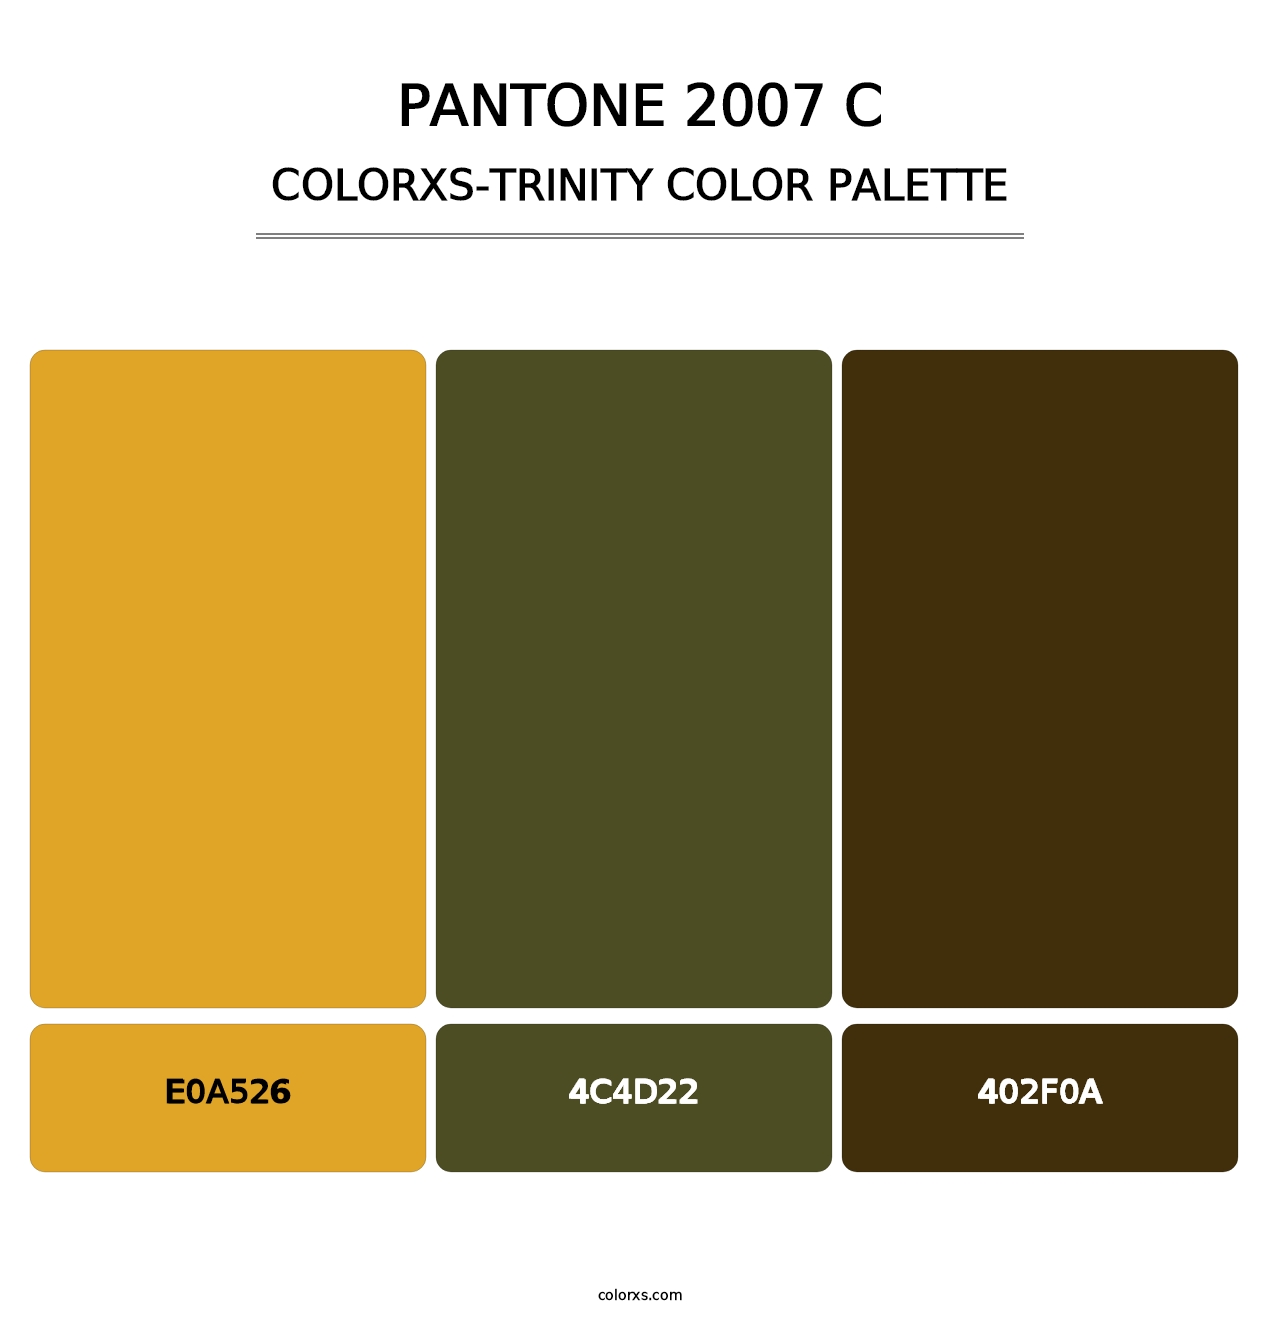 PANTONE 2007 C - Colorxs Trinity Palette